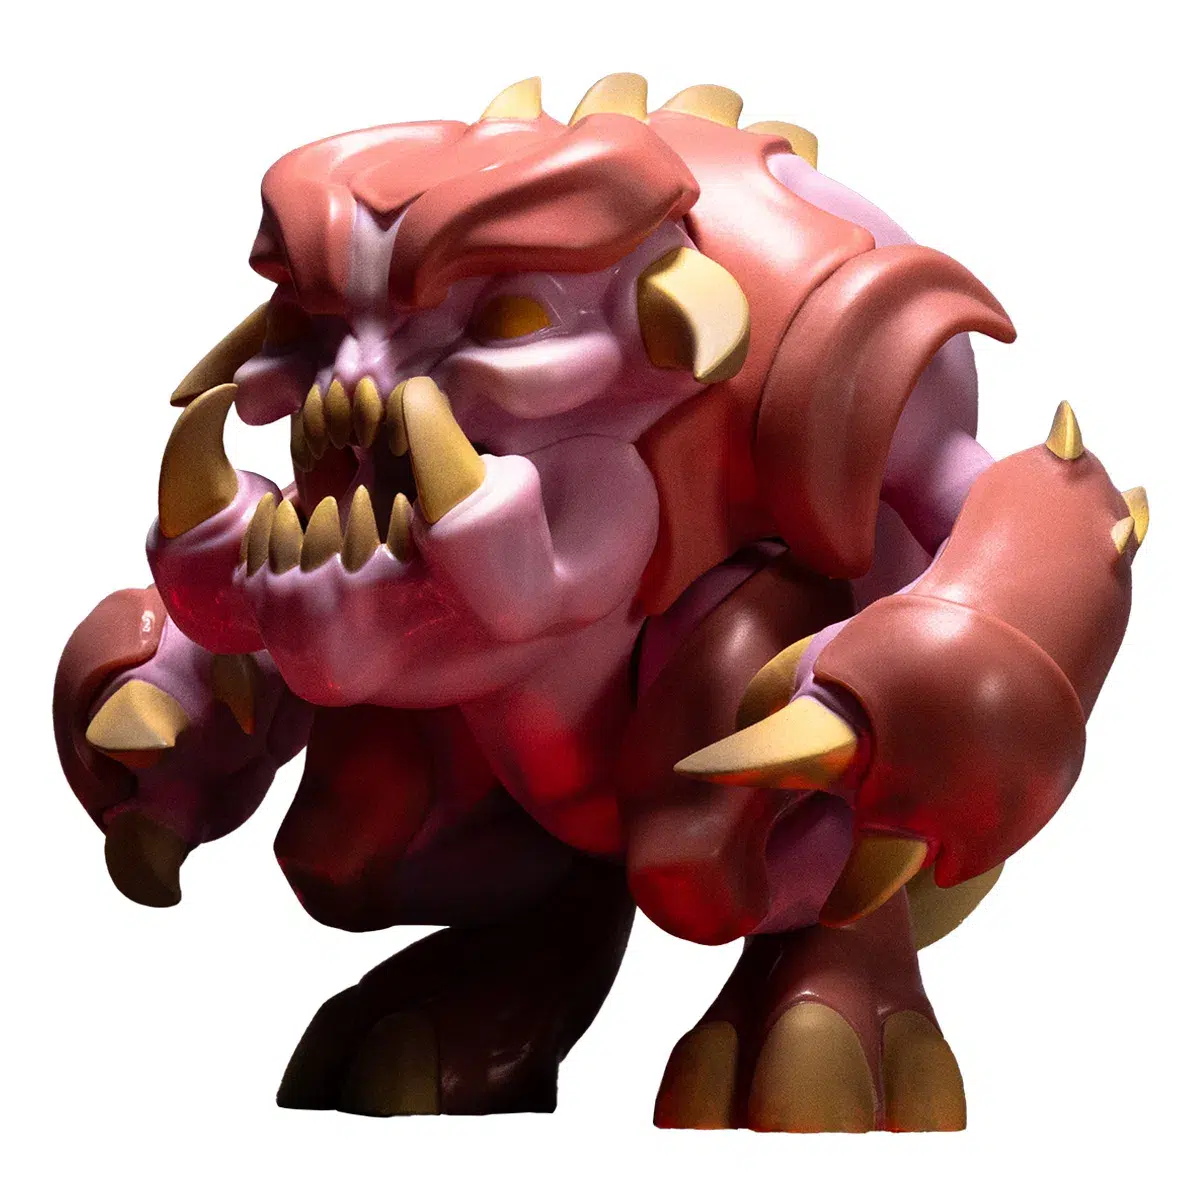 Doom Figure "Pinky" Image 2